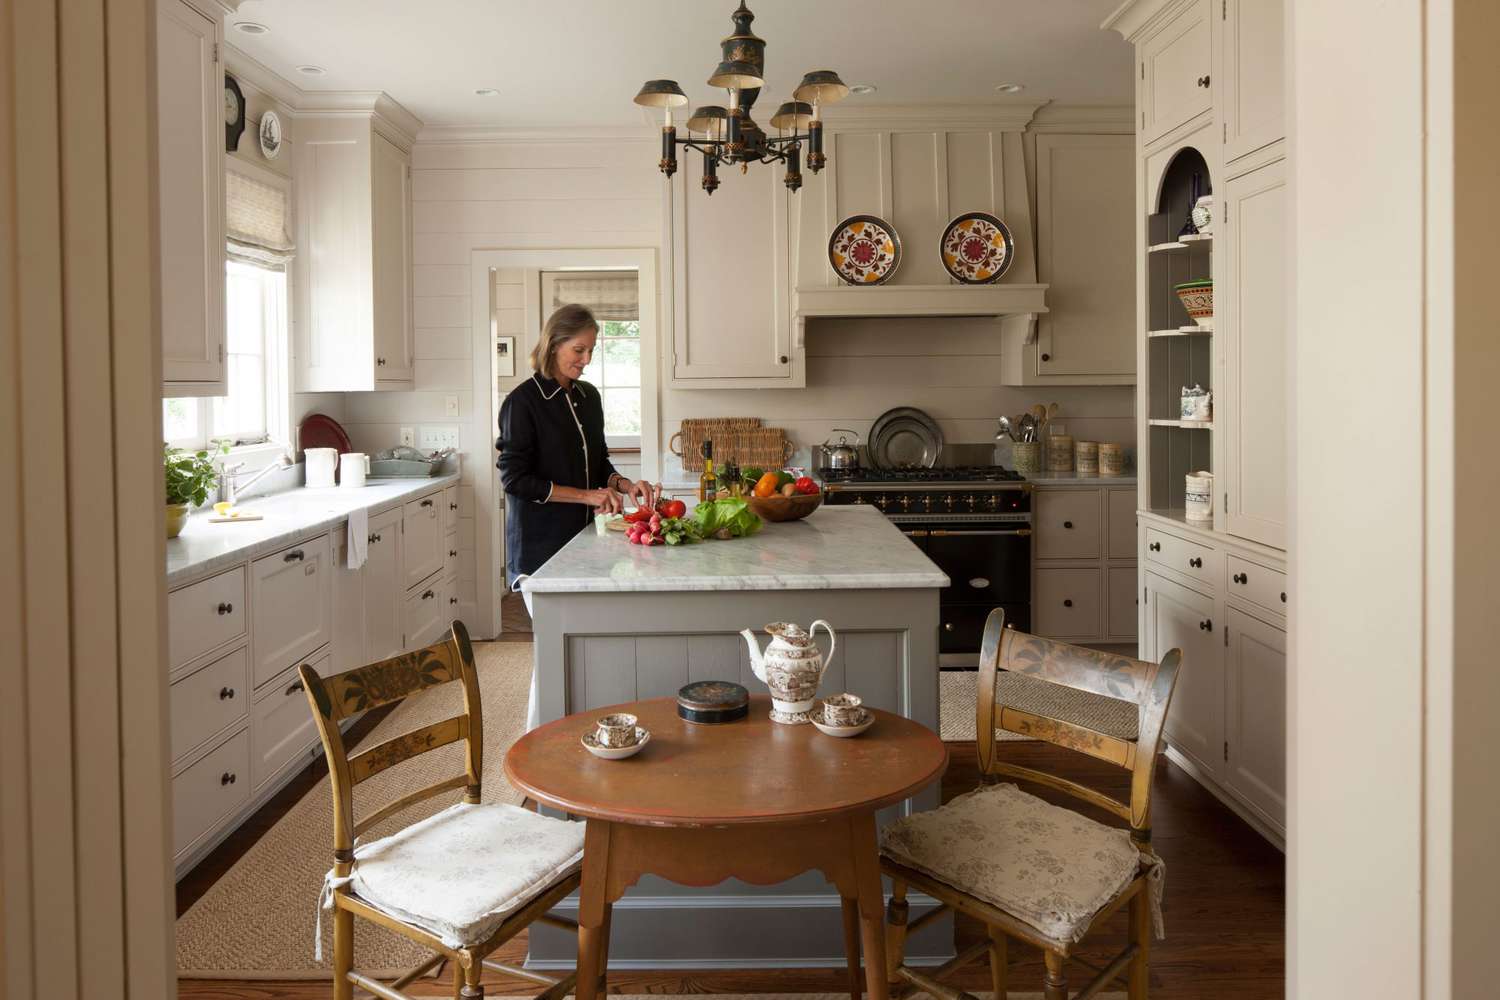 Cape Cod-style cottage - small kitchen ideas